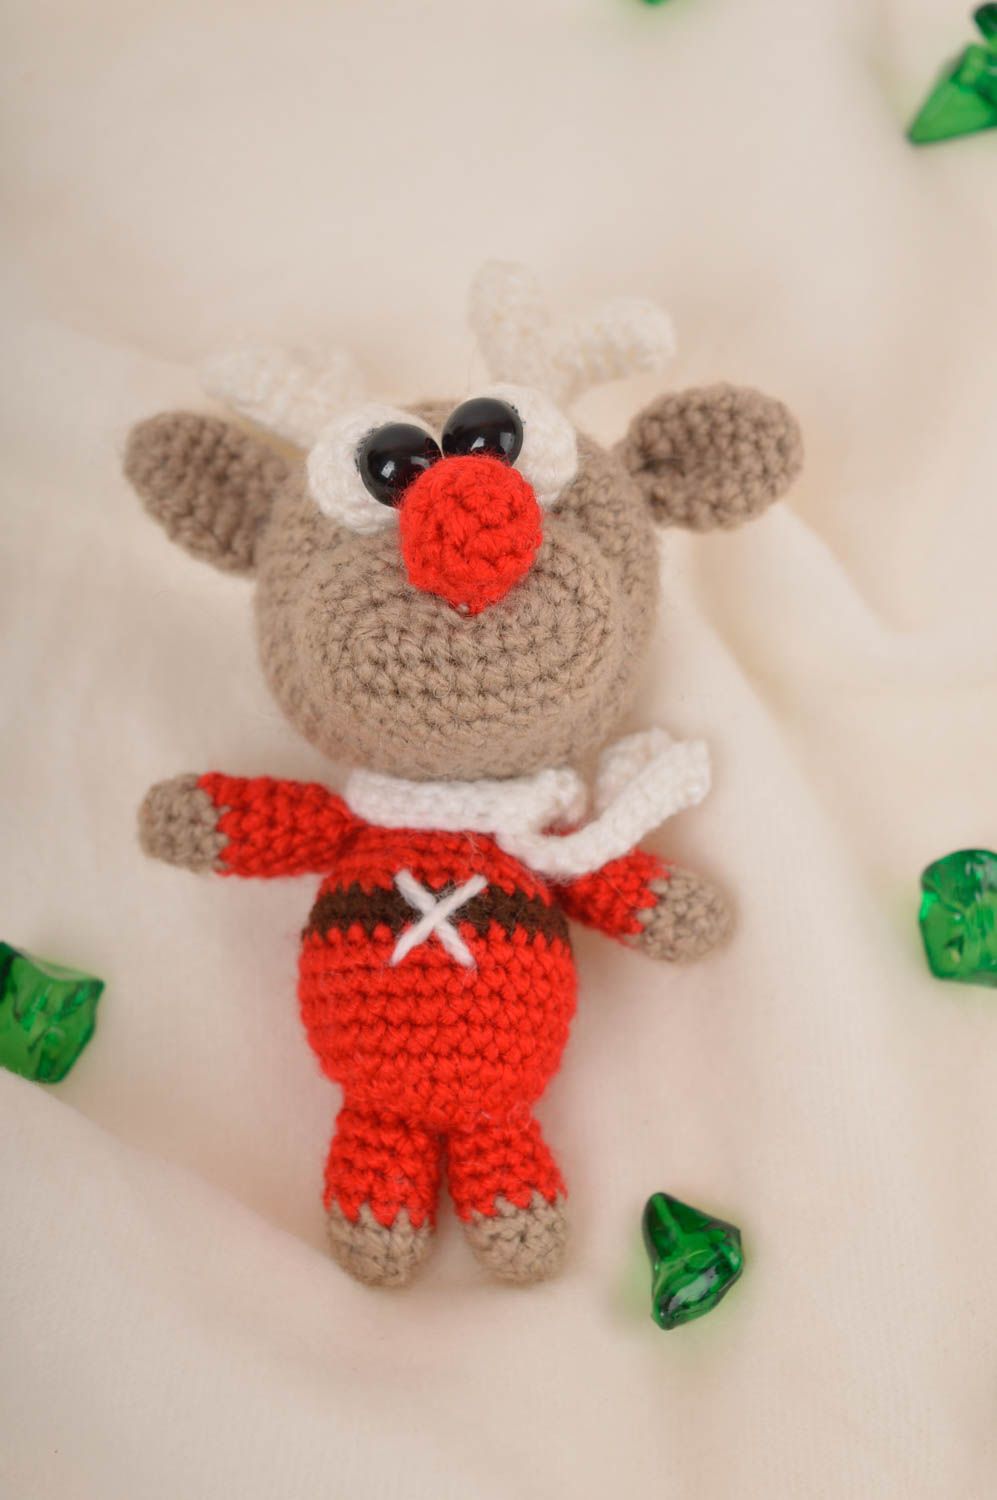 Hand-crocheted bear toy handmade crocheted toy for kids elegant nursery decor photo 1